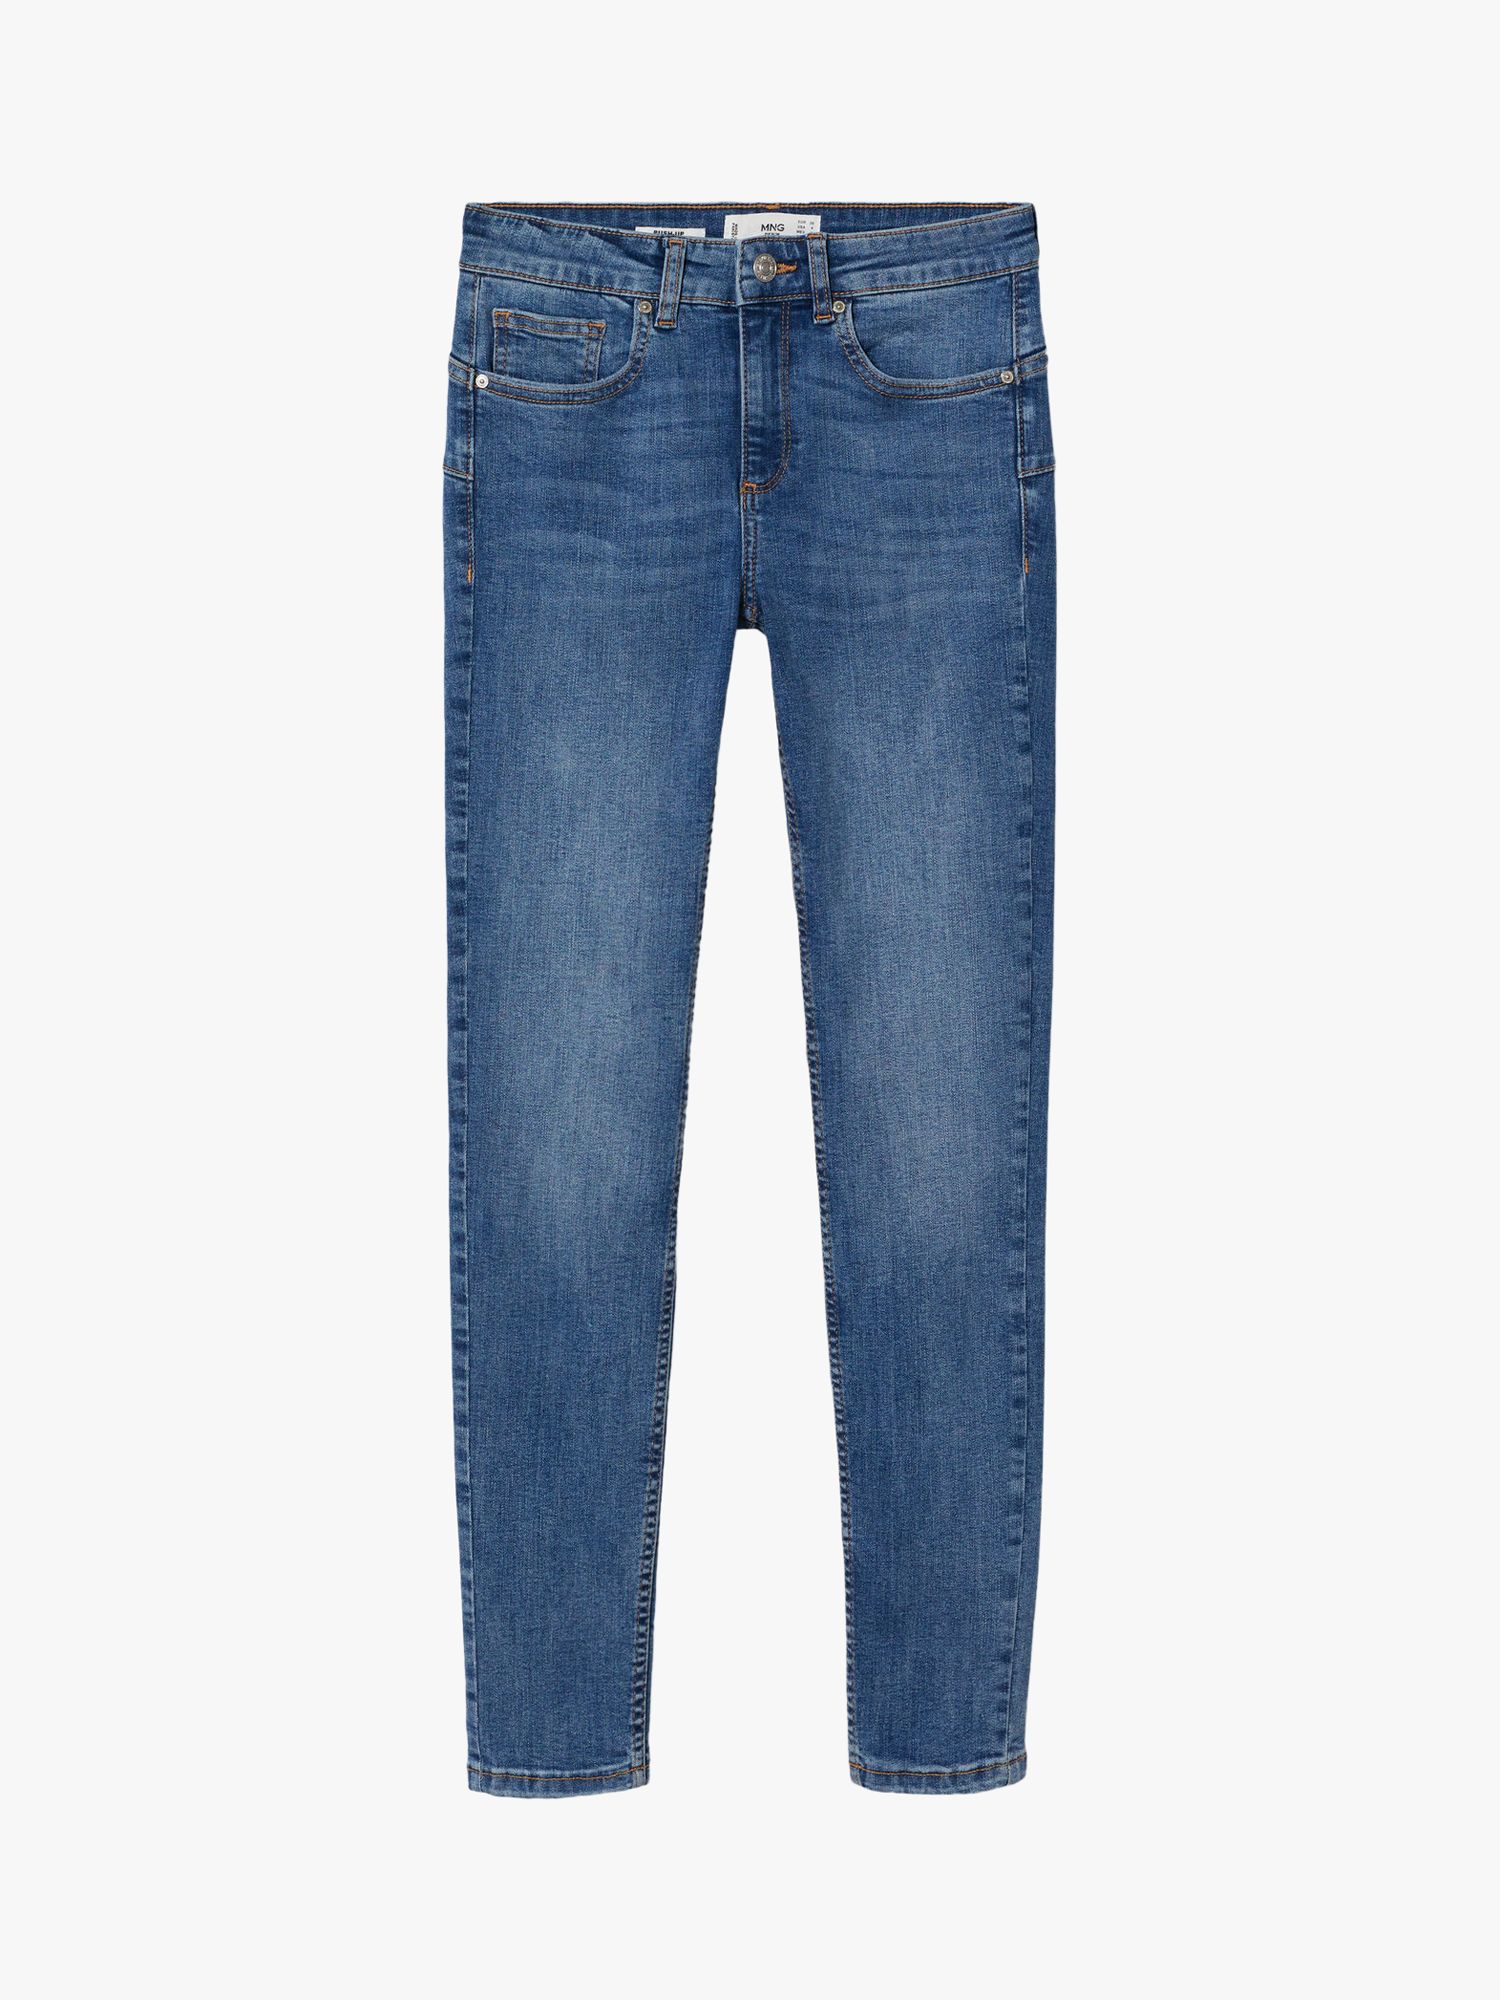 Mango Skinny Jeans, Blue at John Lewis & Partners